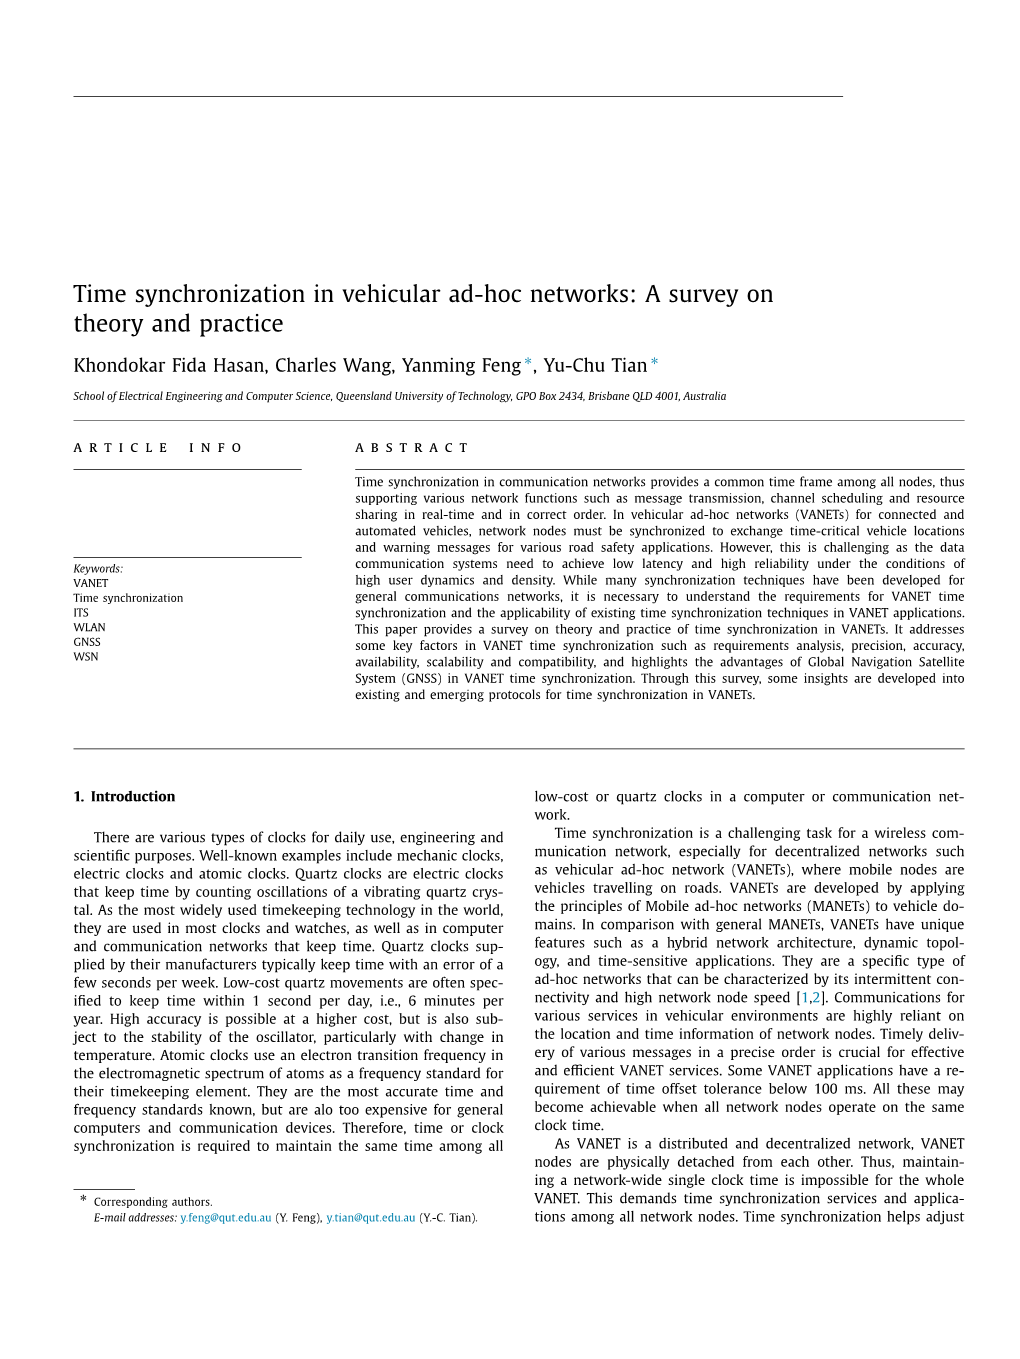 Time Synchronization in Vehicular Ad-Hoc Networks: a Survey on Theory and Practice ∗ ∗ Khondokar Fida Hasan, Charles Wang, Yanming Feng , Yu-Chu Tian